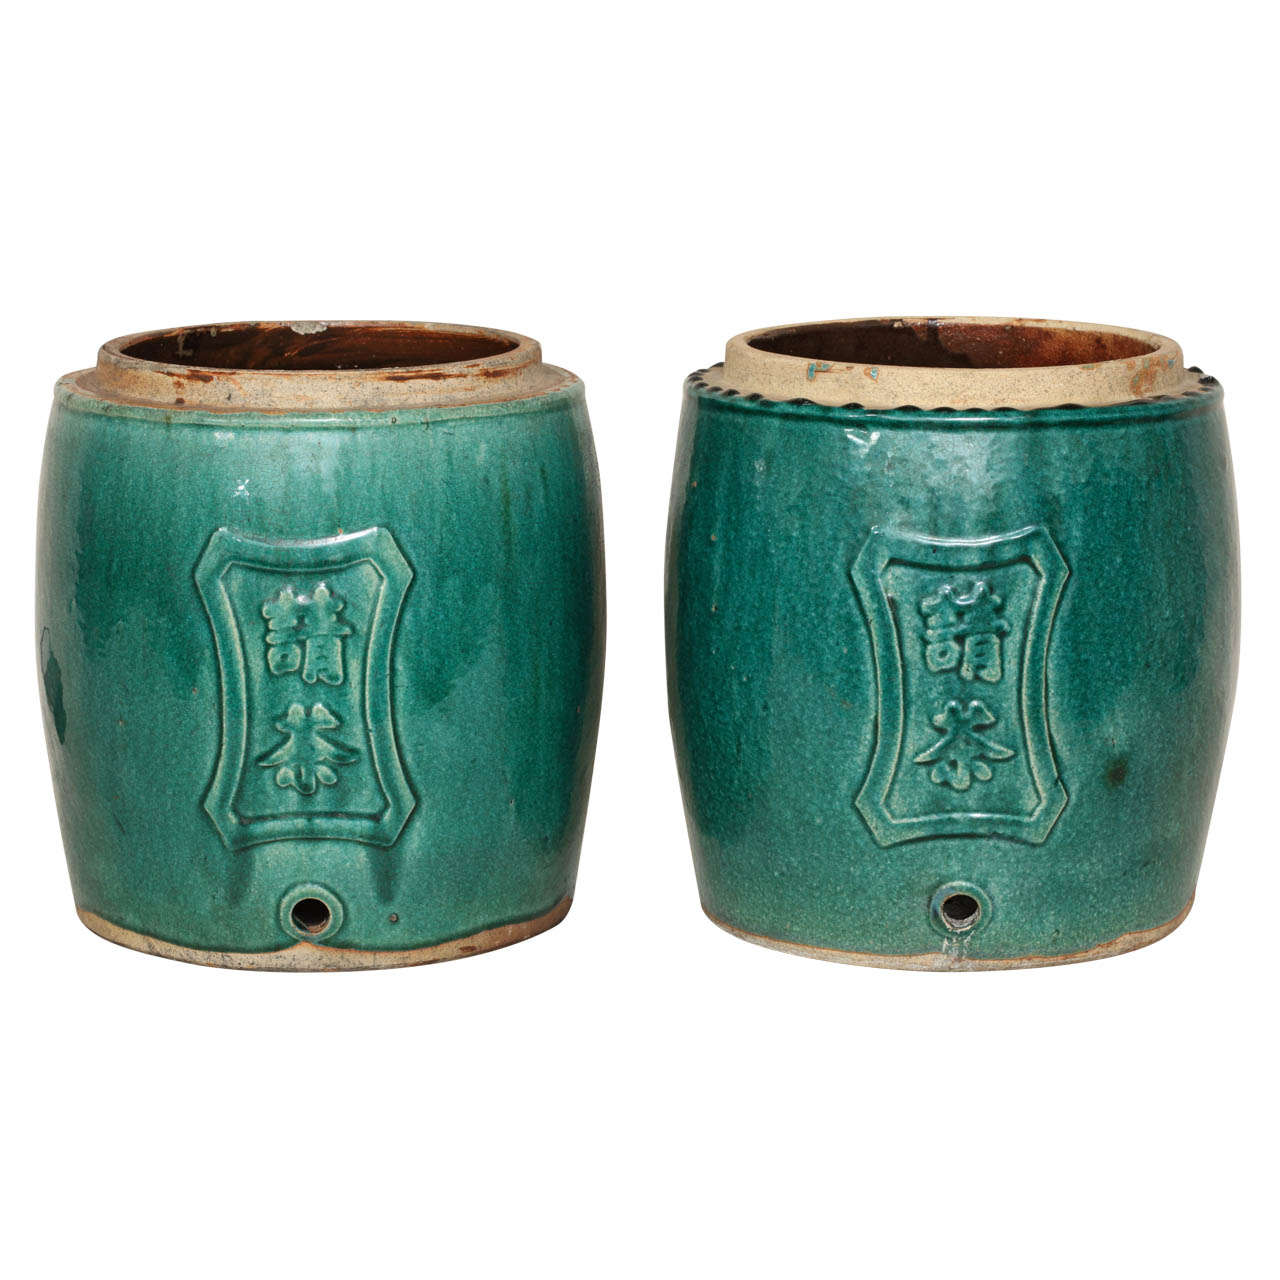 Pair of 19th Century Chinese Turquoise Glazed Jardineres / Planters